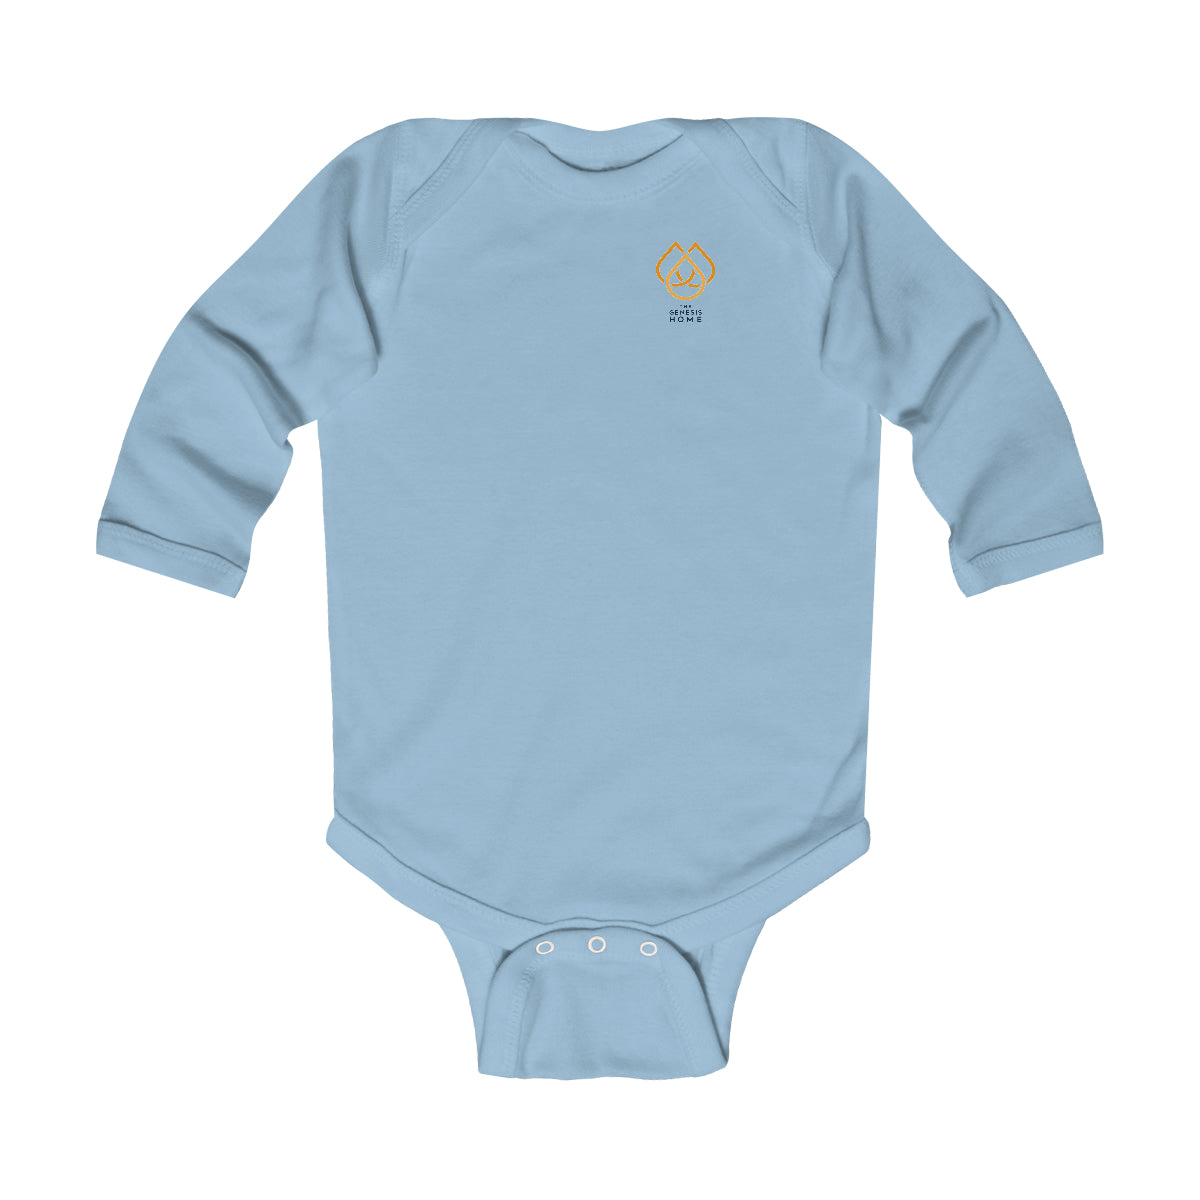 The Genesis Home Infant Long Sleeve Bodysuit